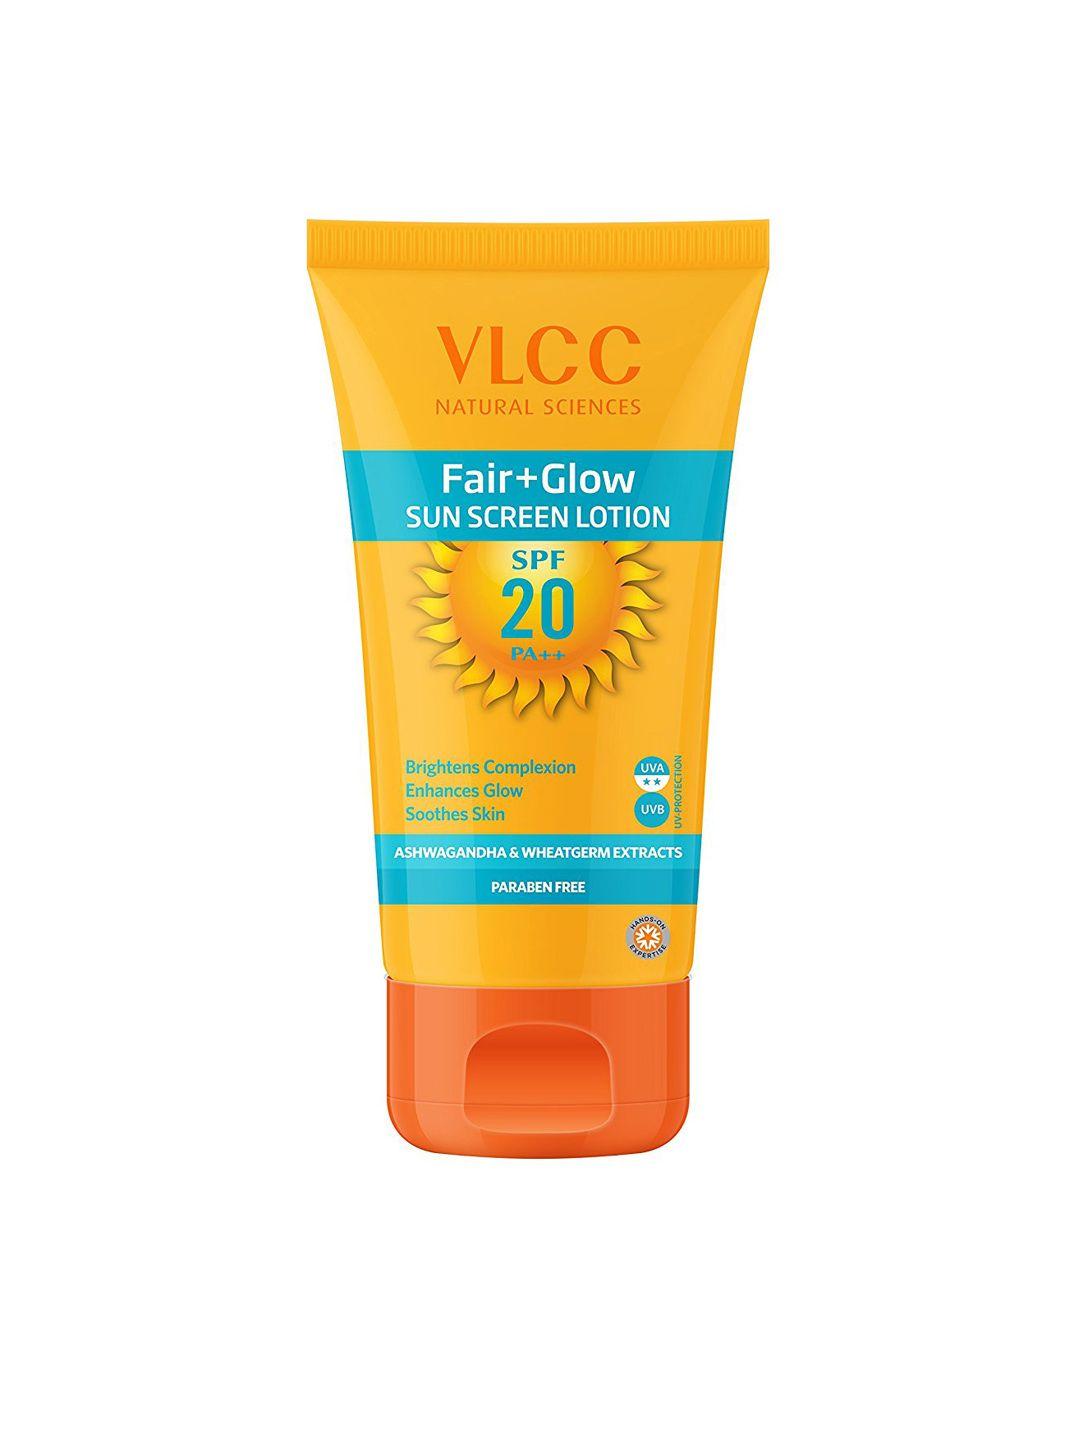 vlcc--unisex-fair+glow-spf-20-pa++-sunscreen-lotion-50-ml